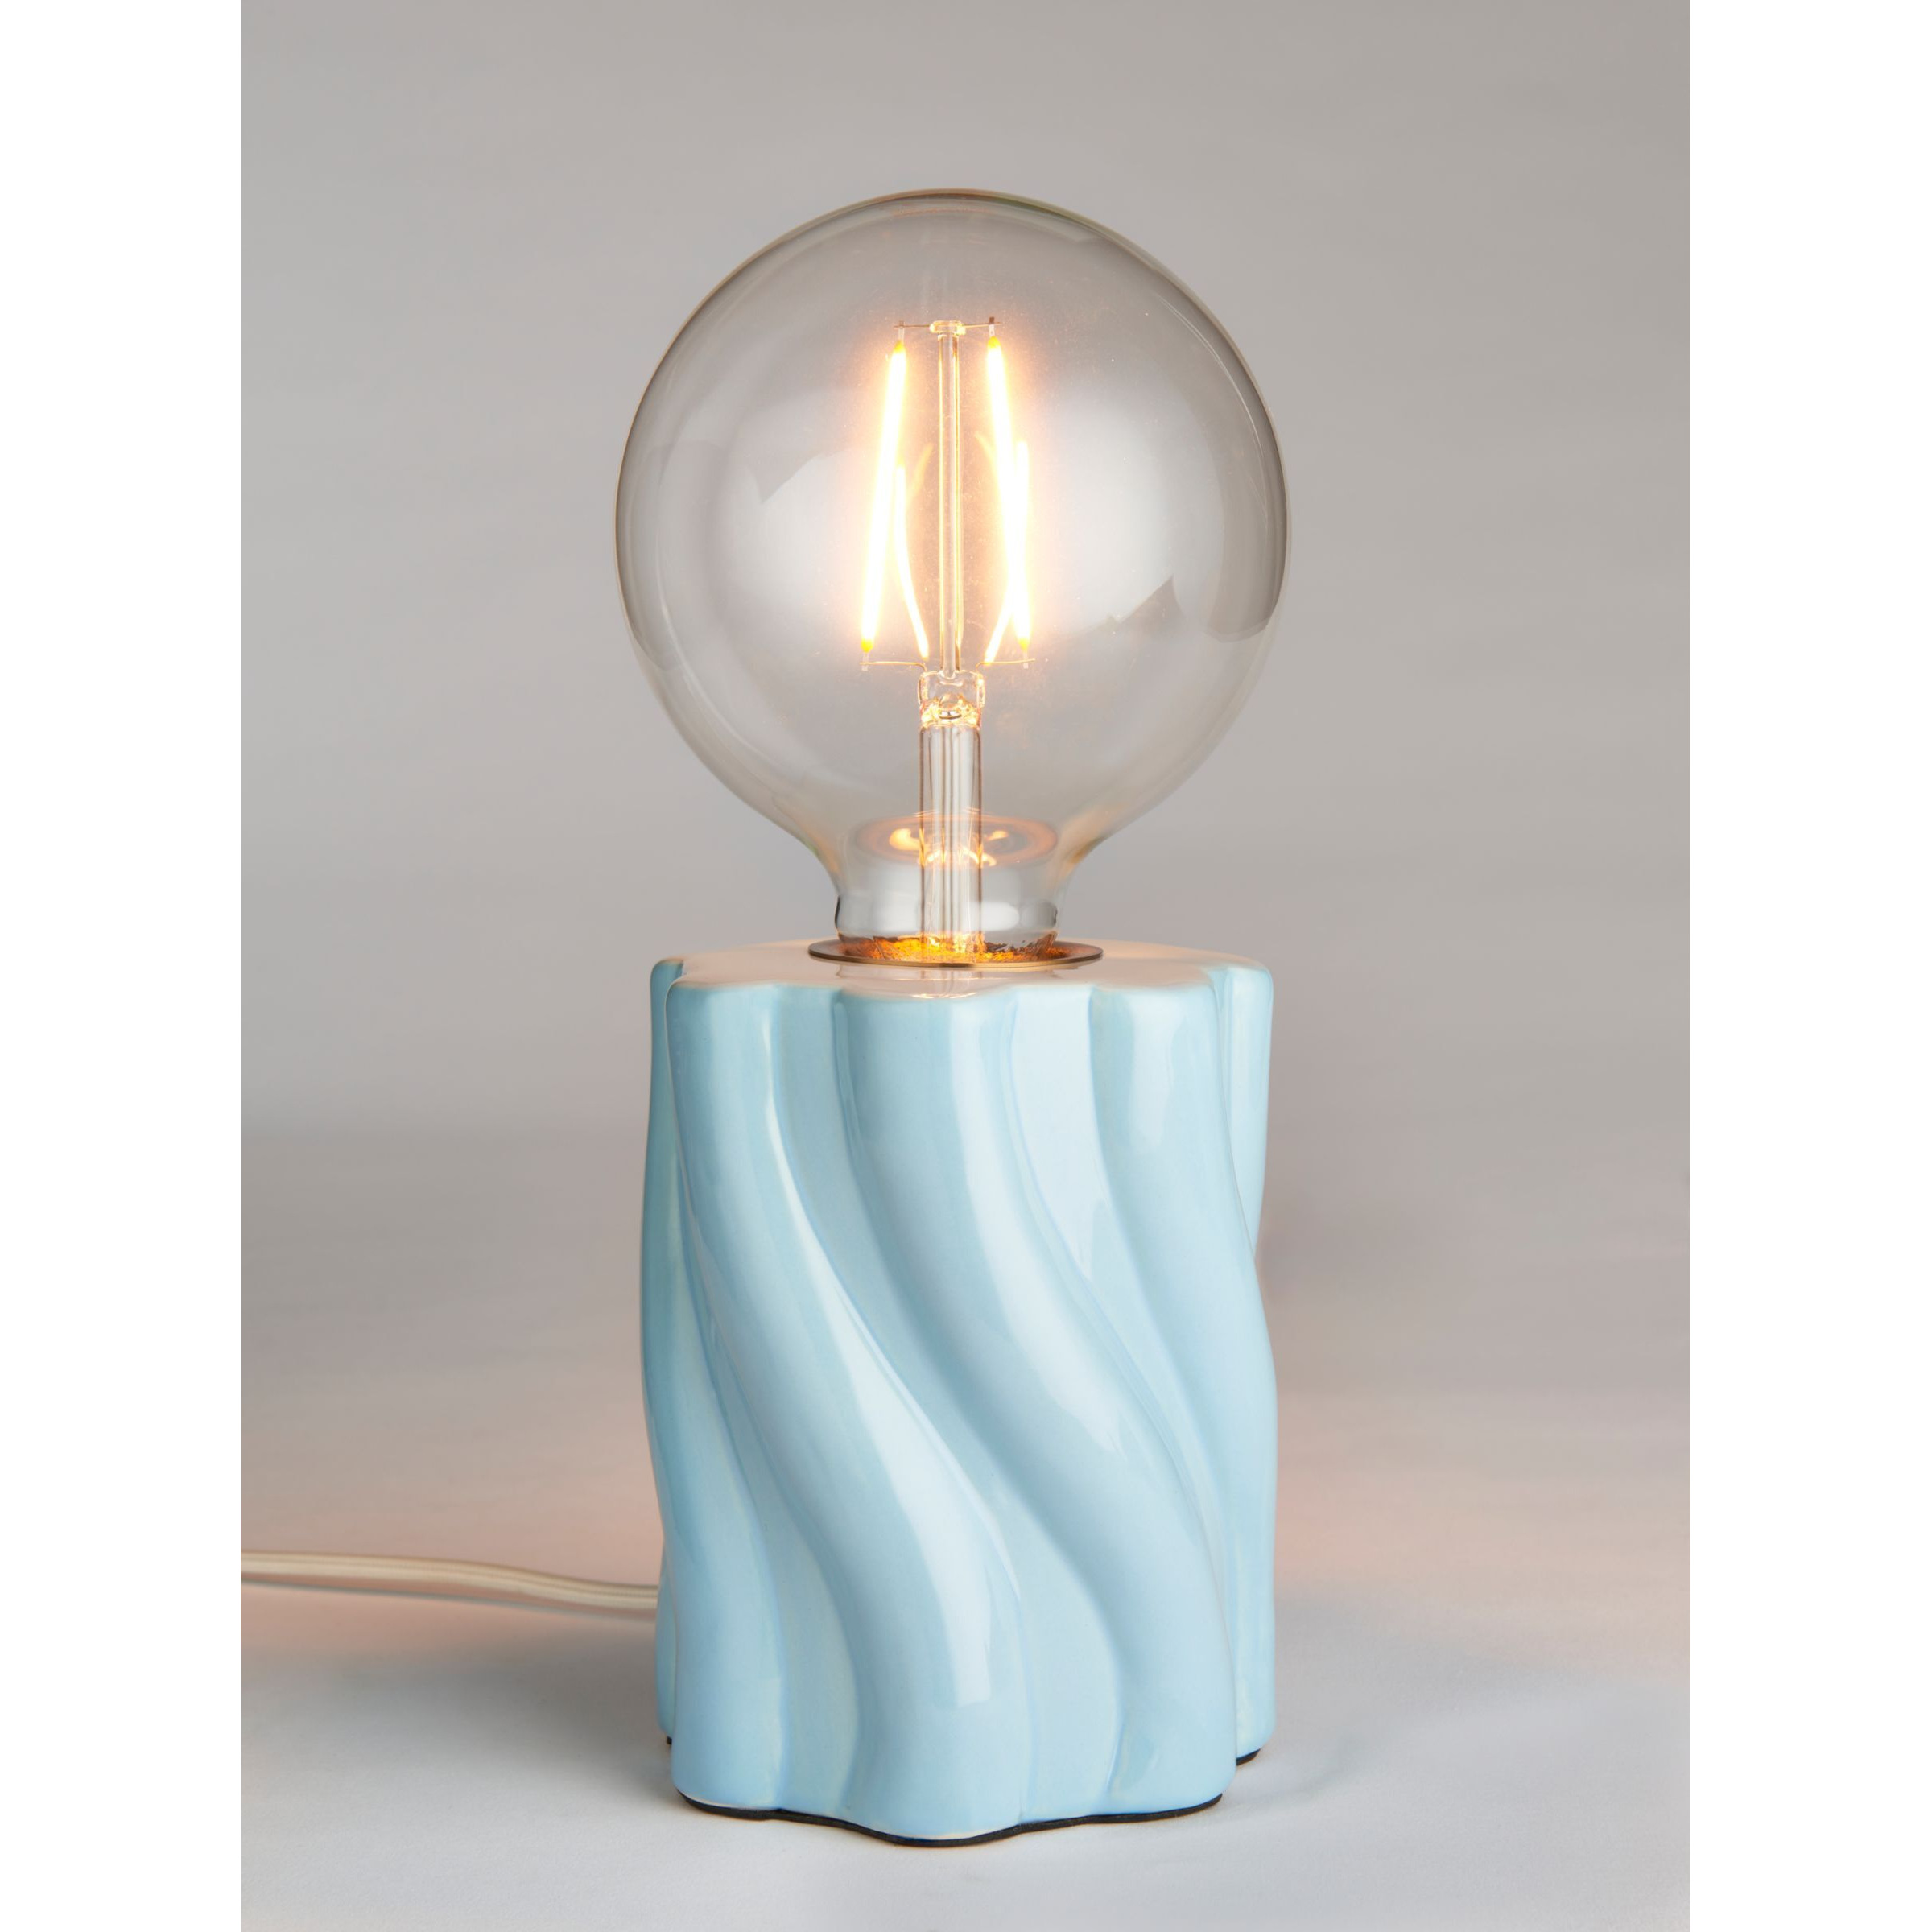 John Lewis Twist Bulbholder Table Lamp - image 1